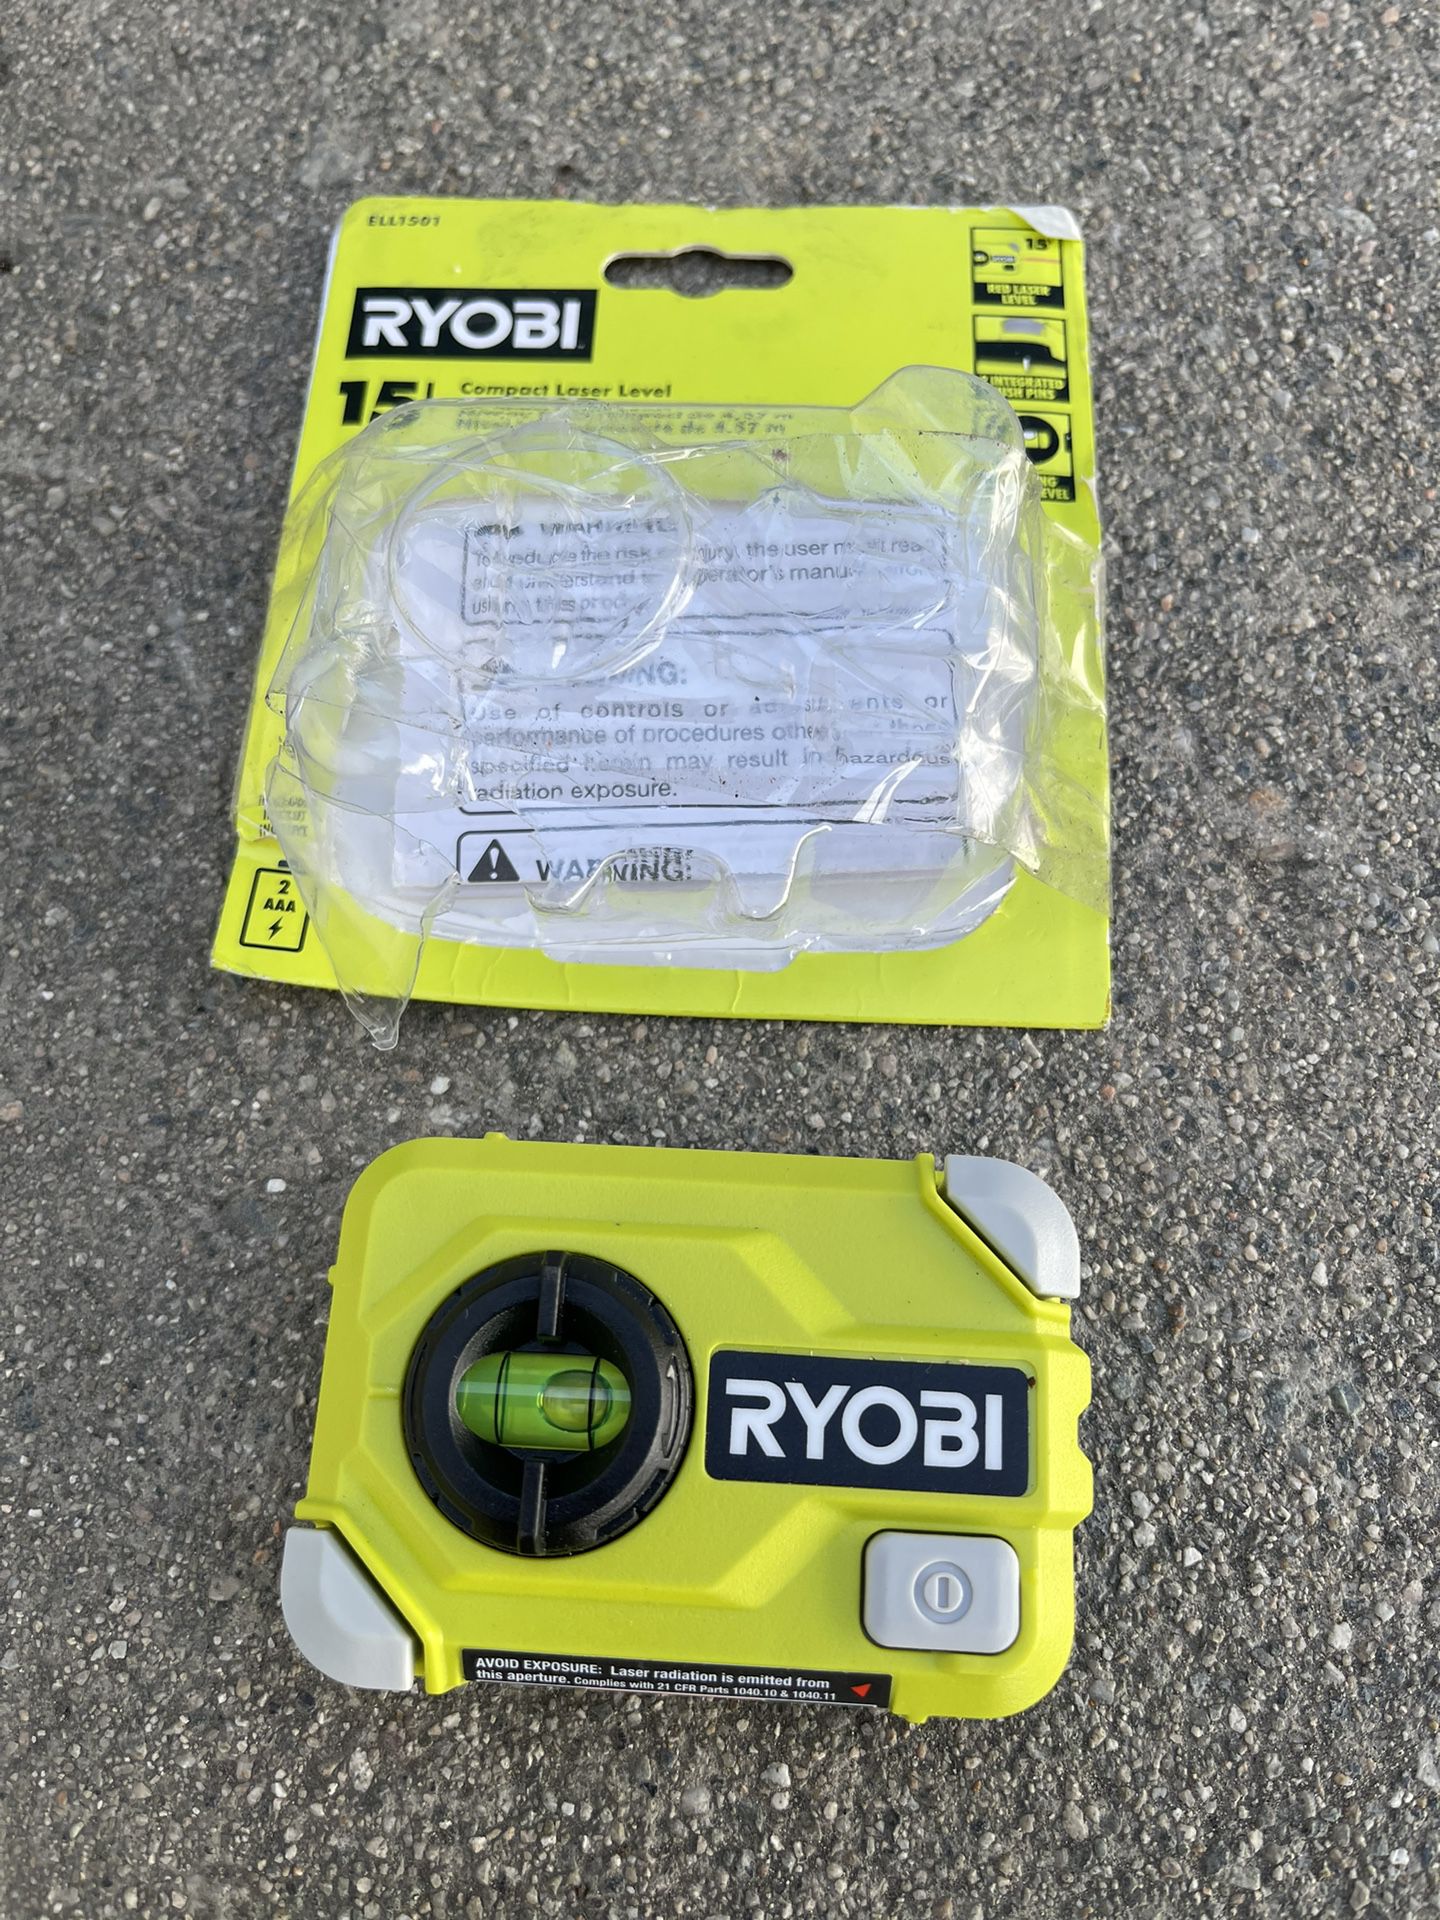 RYOBI 15' Compact Laser Level